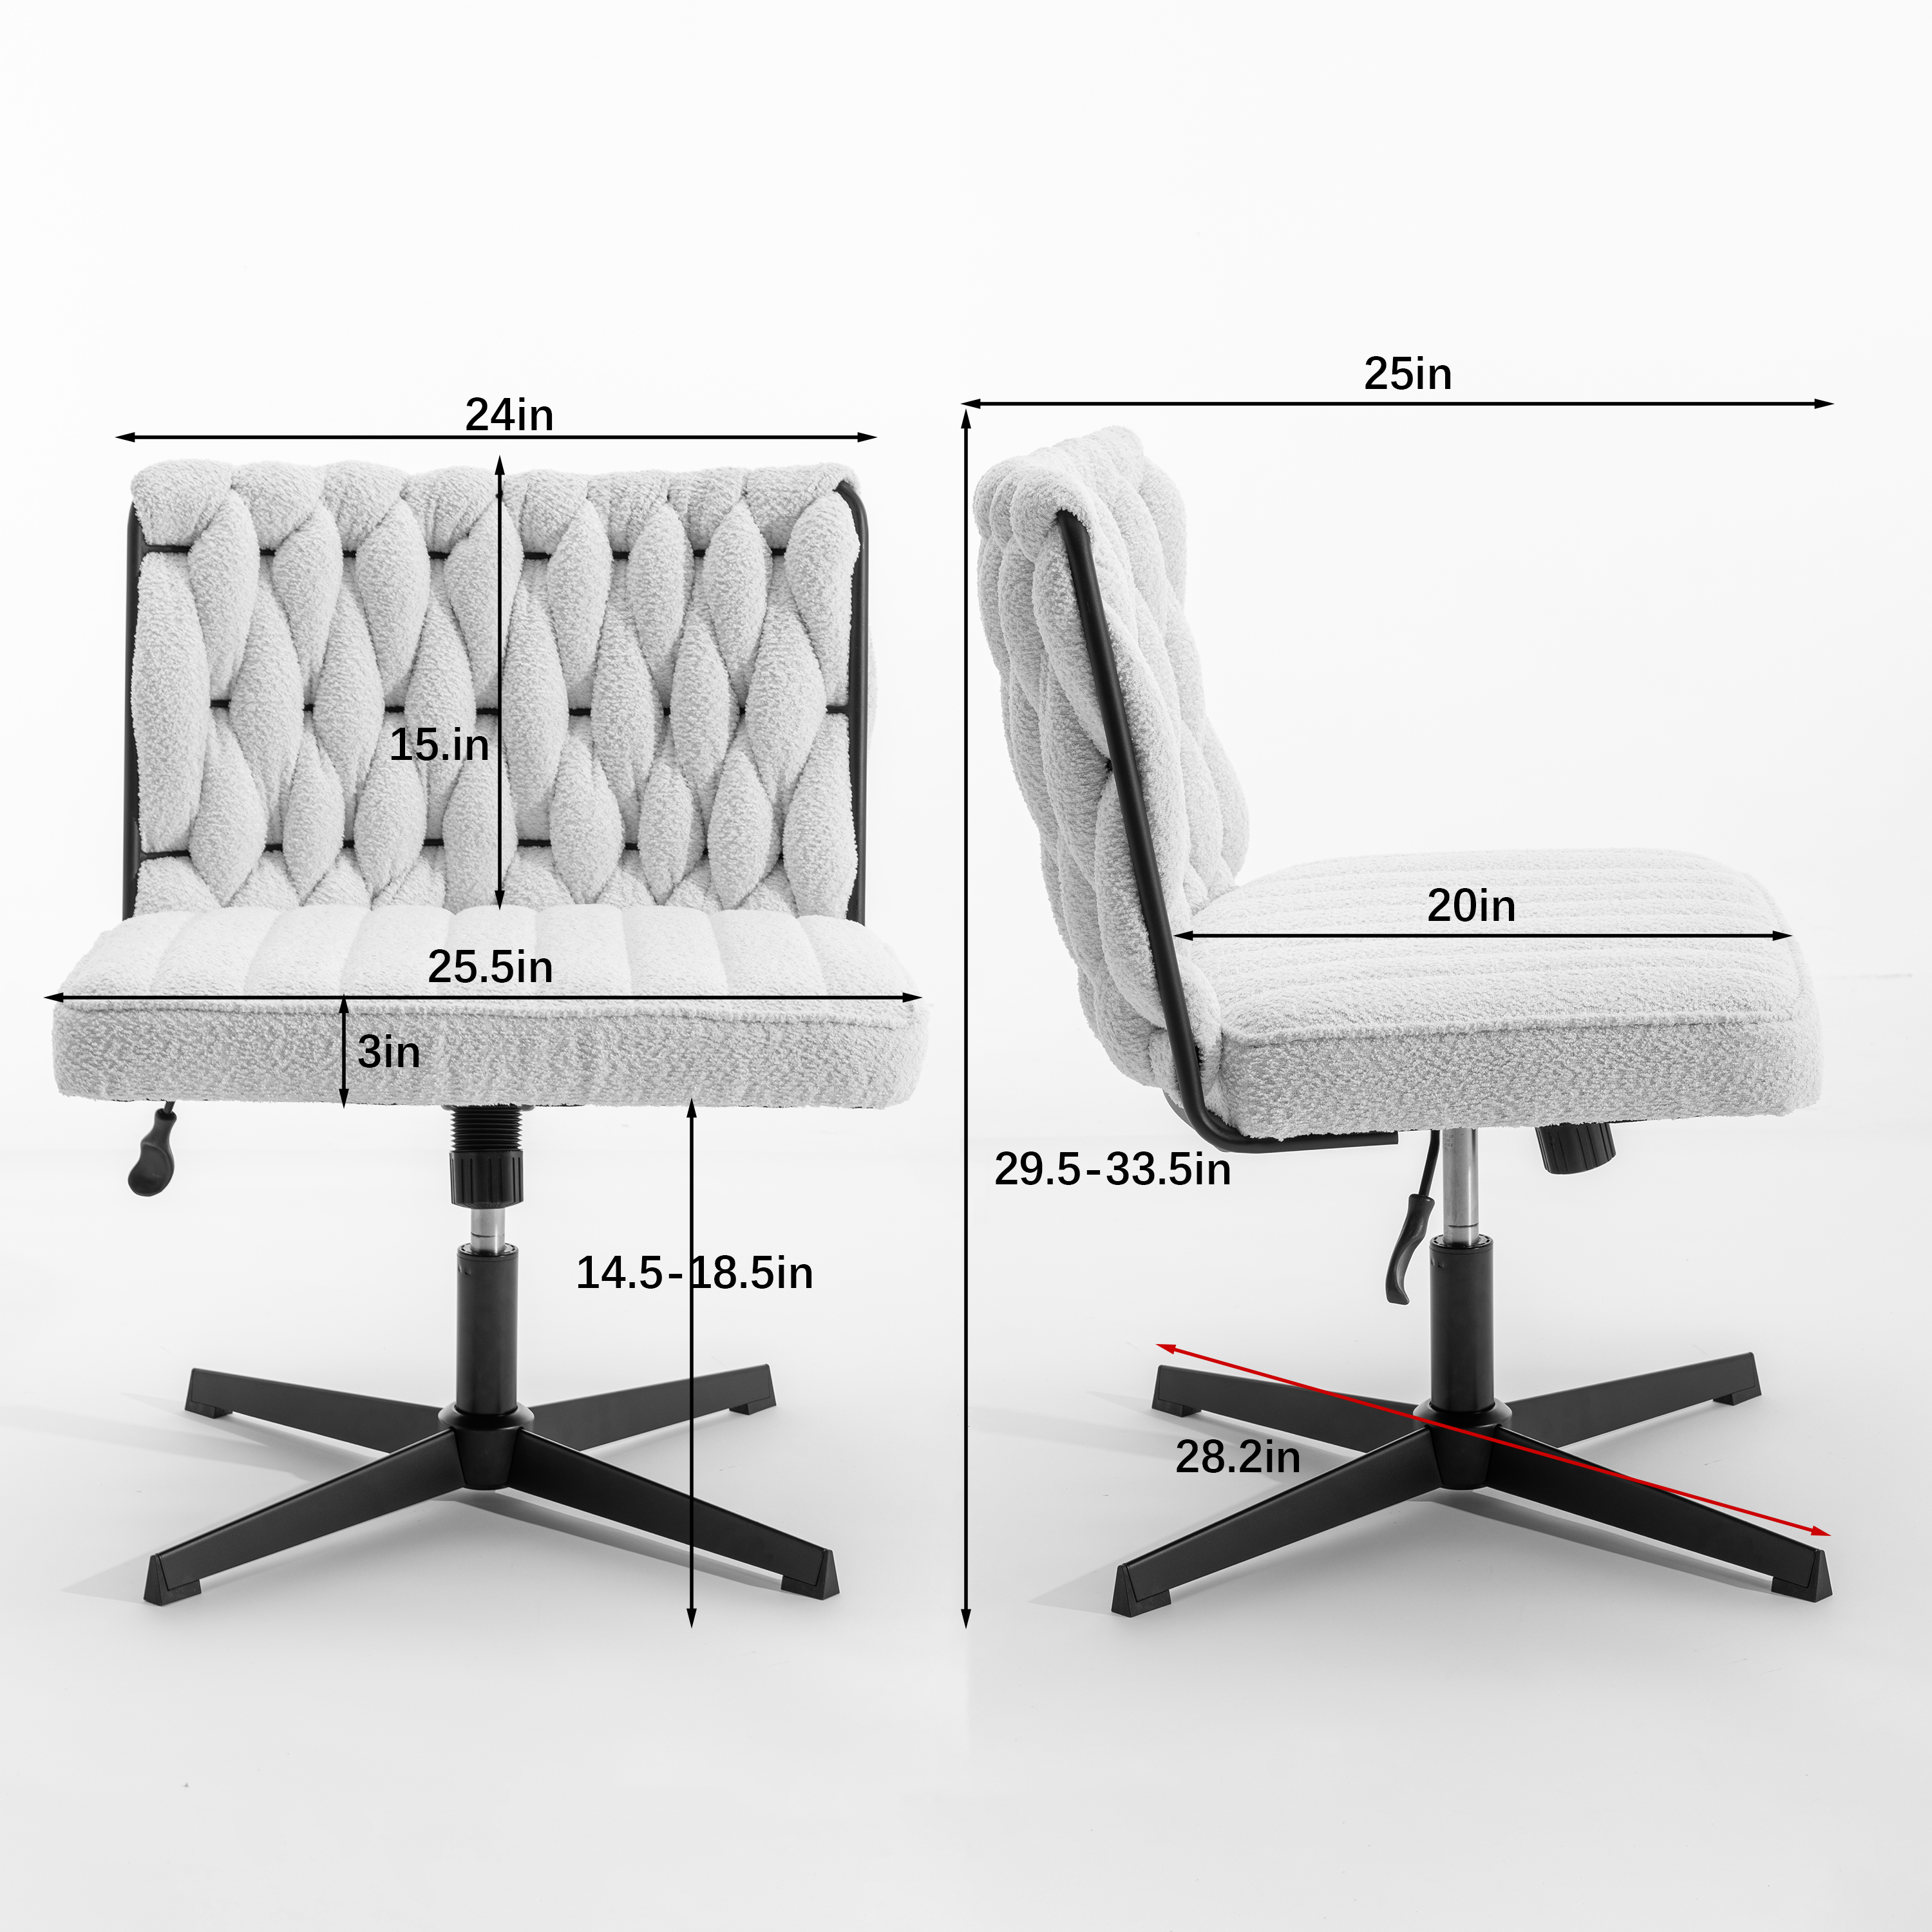 Armless Office Desk Chair No Wheels - Green